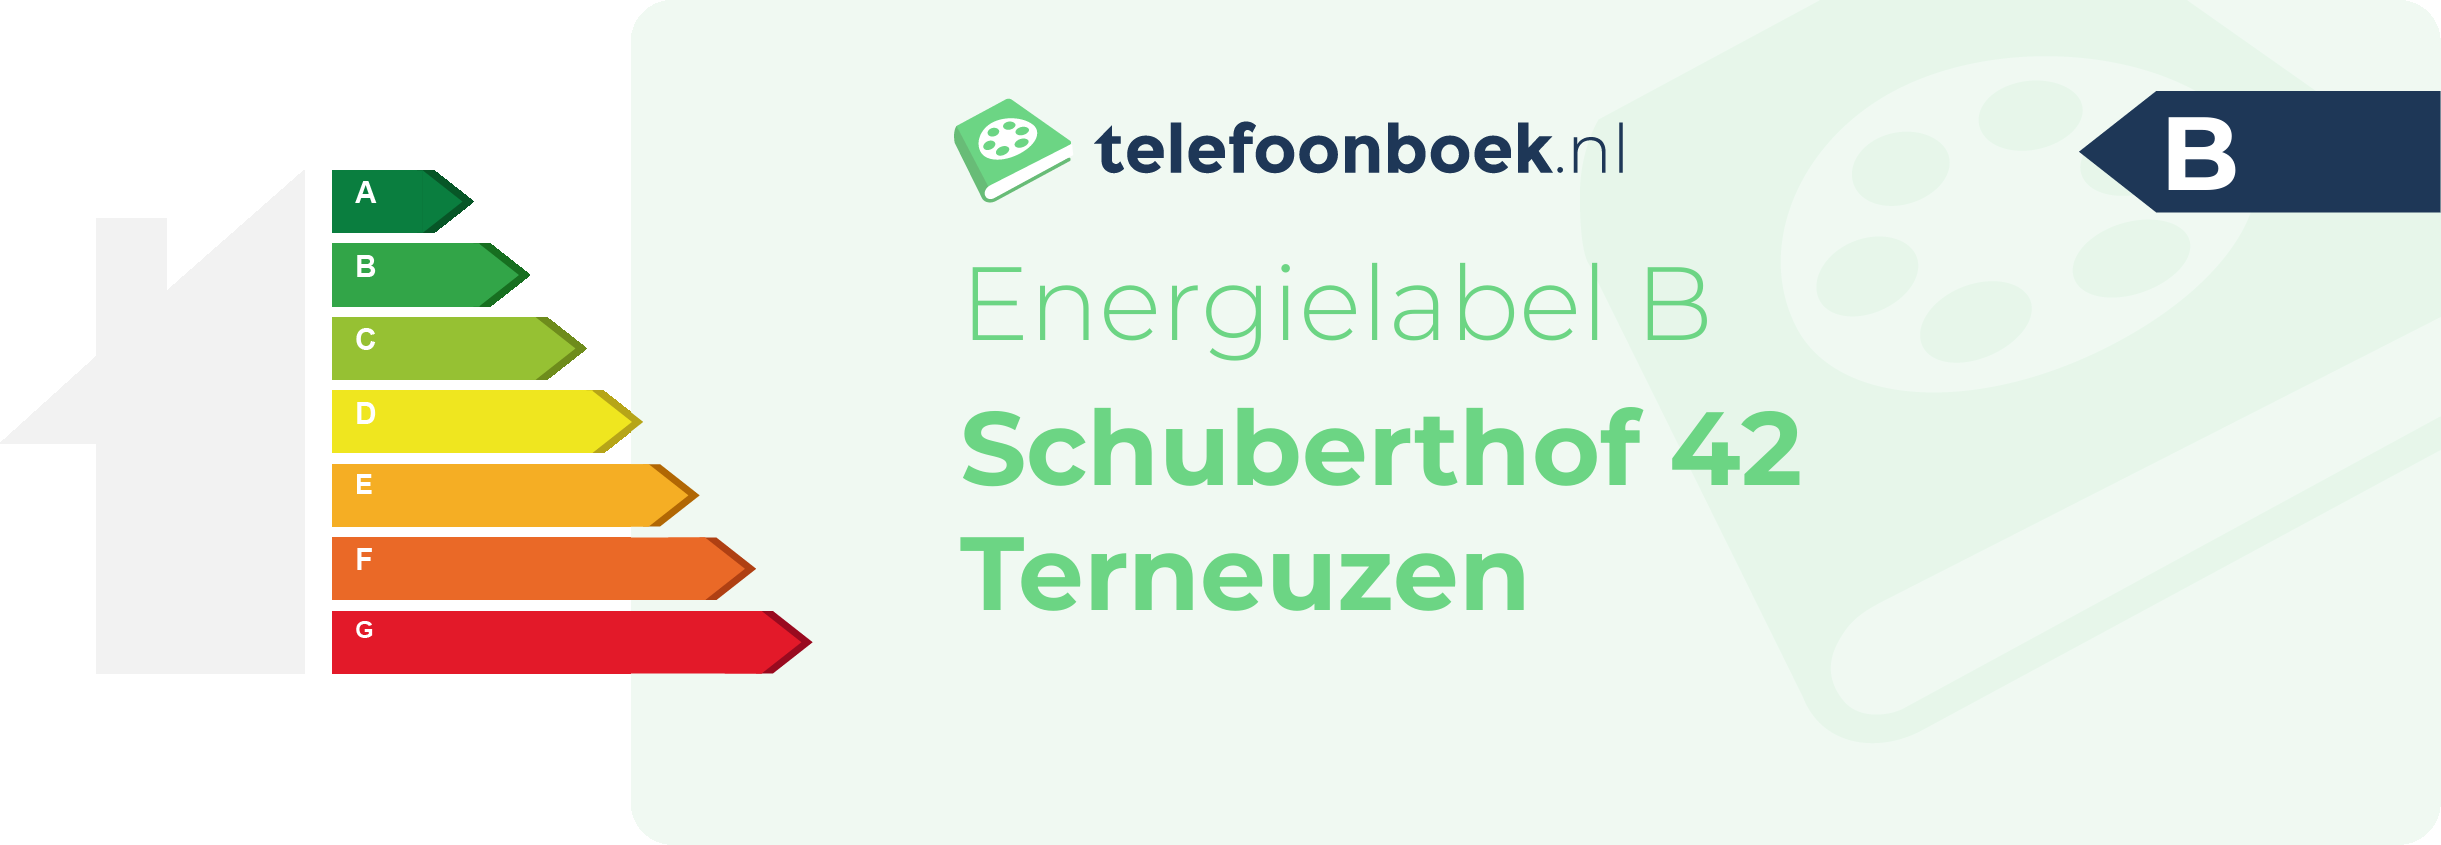 Energielabel Schuberthof 42 Terneuzen